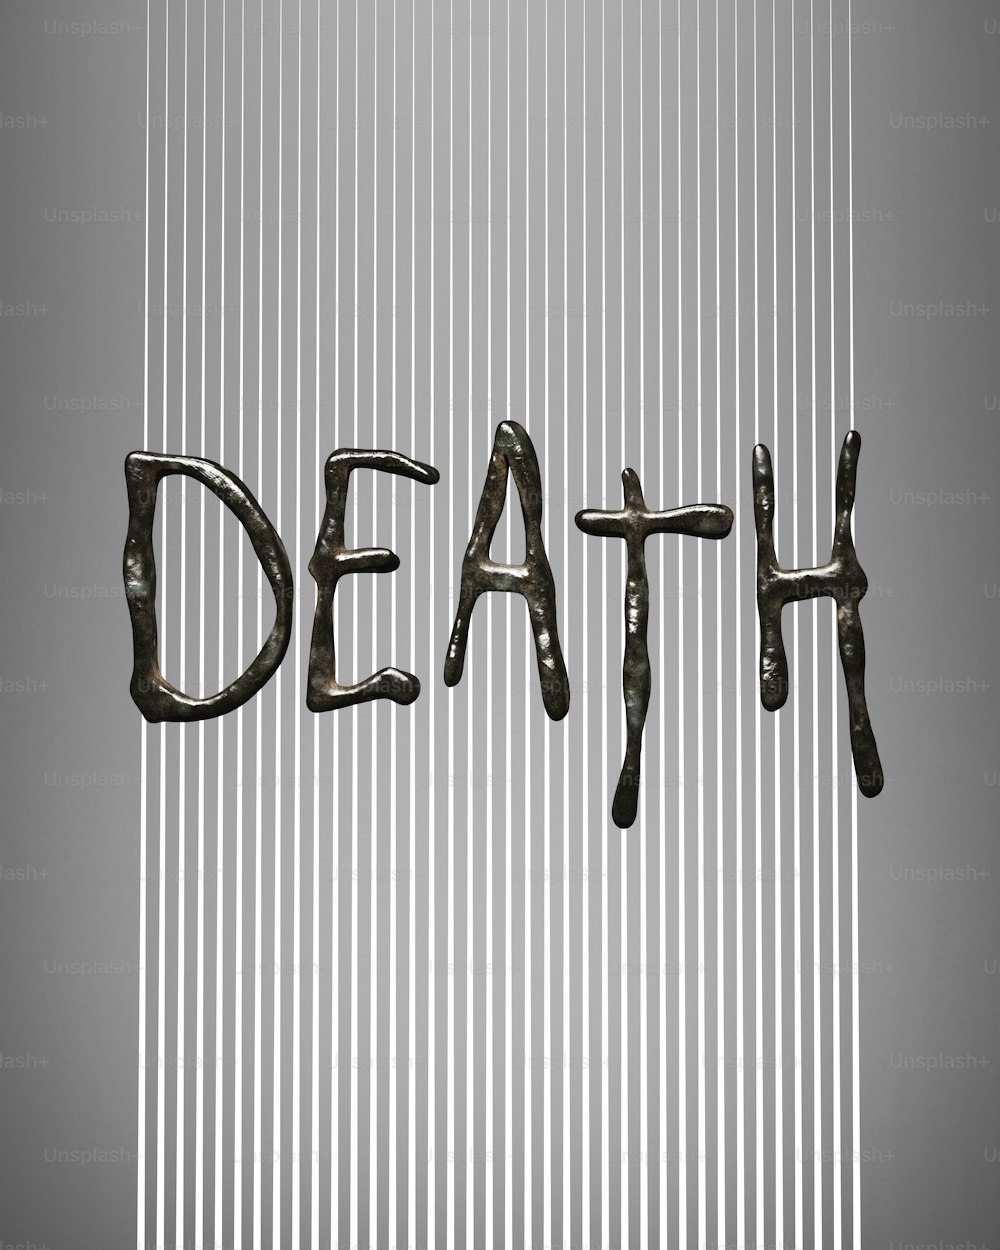 the word death is written in metal letters